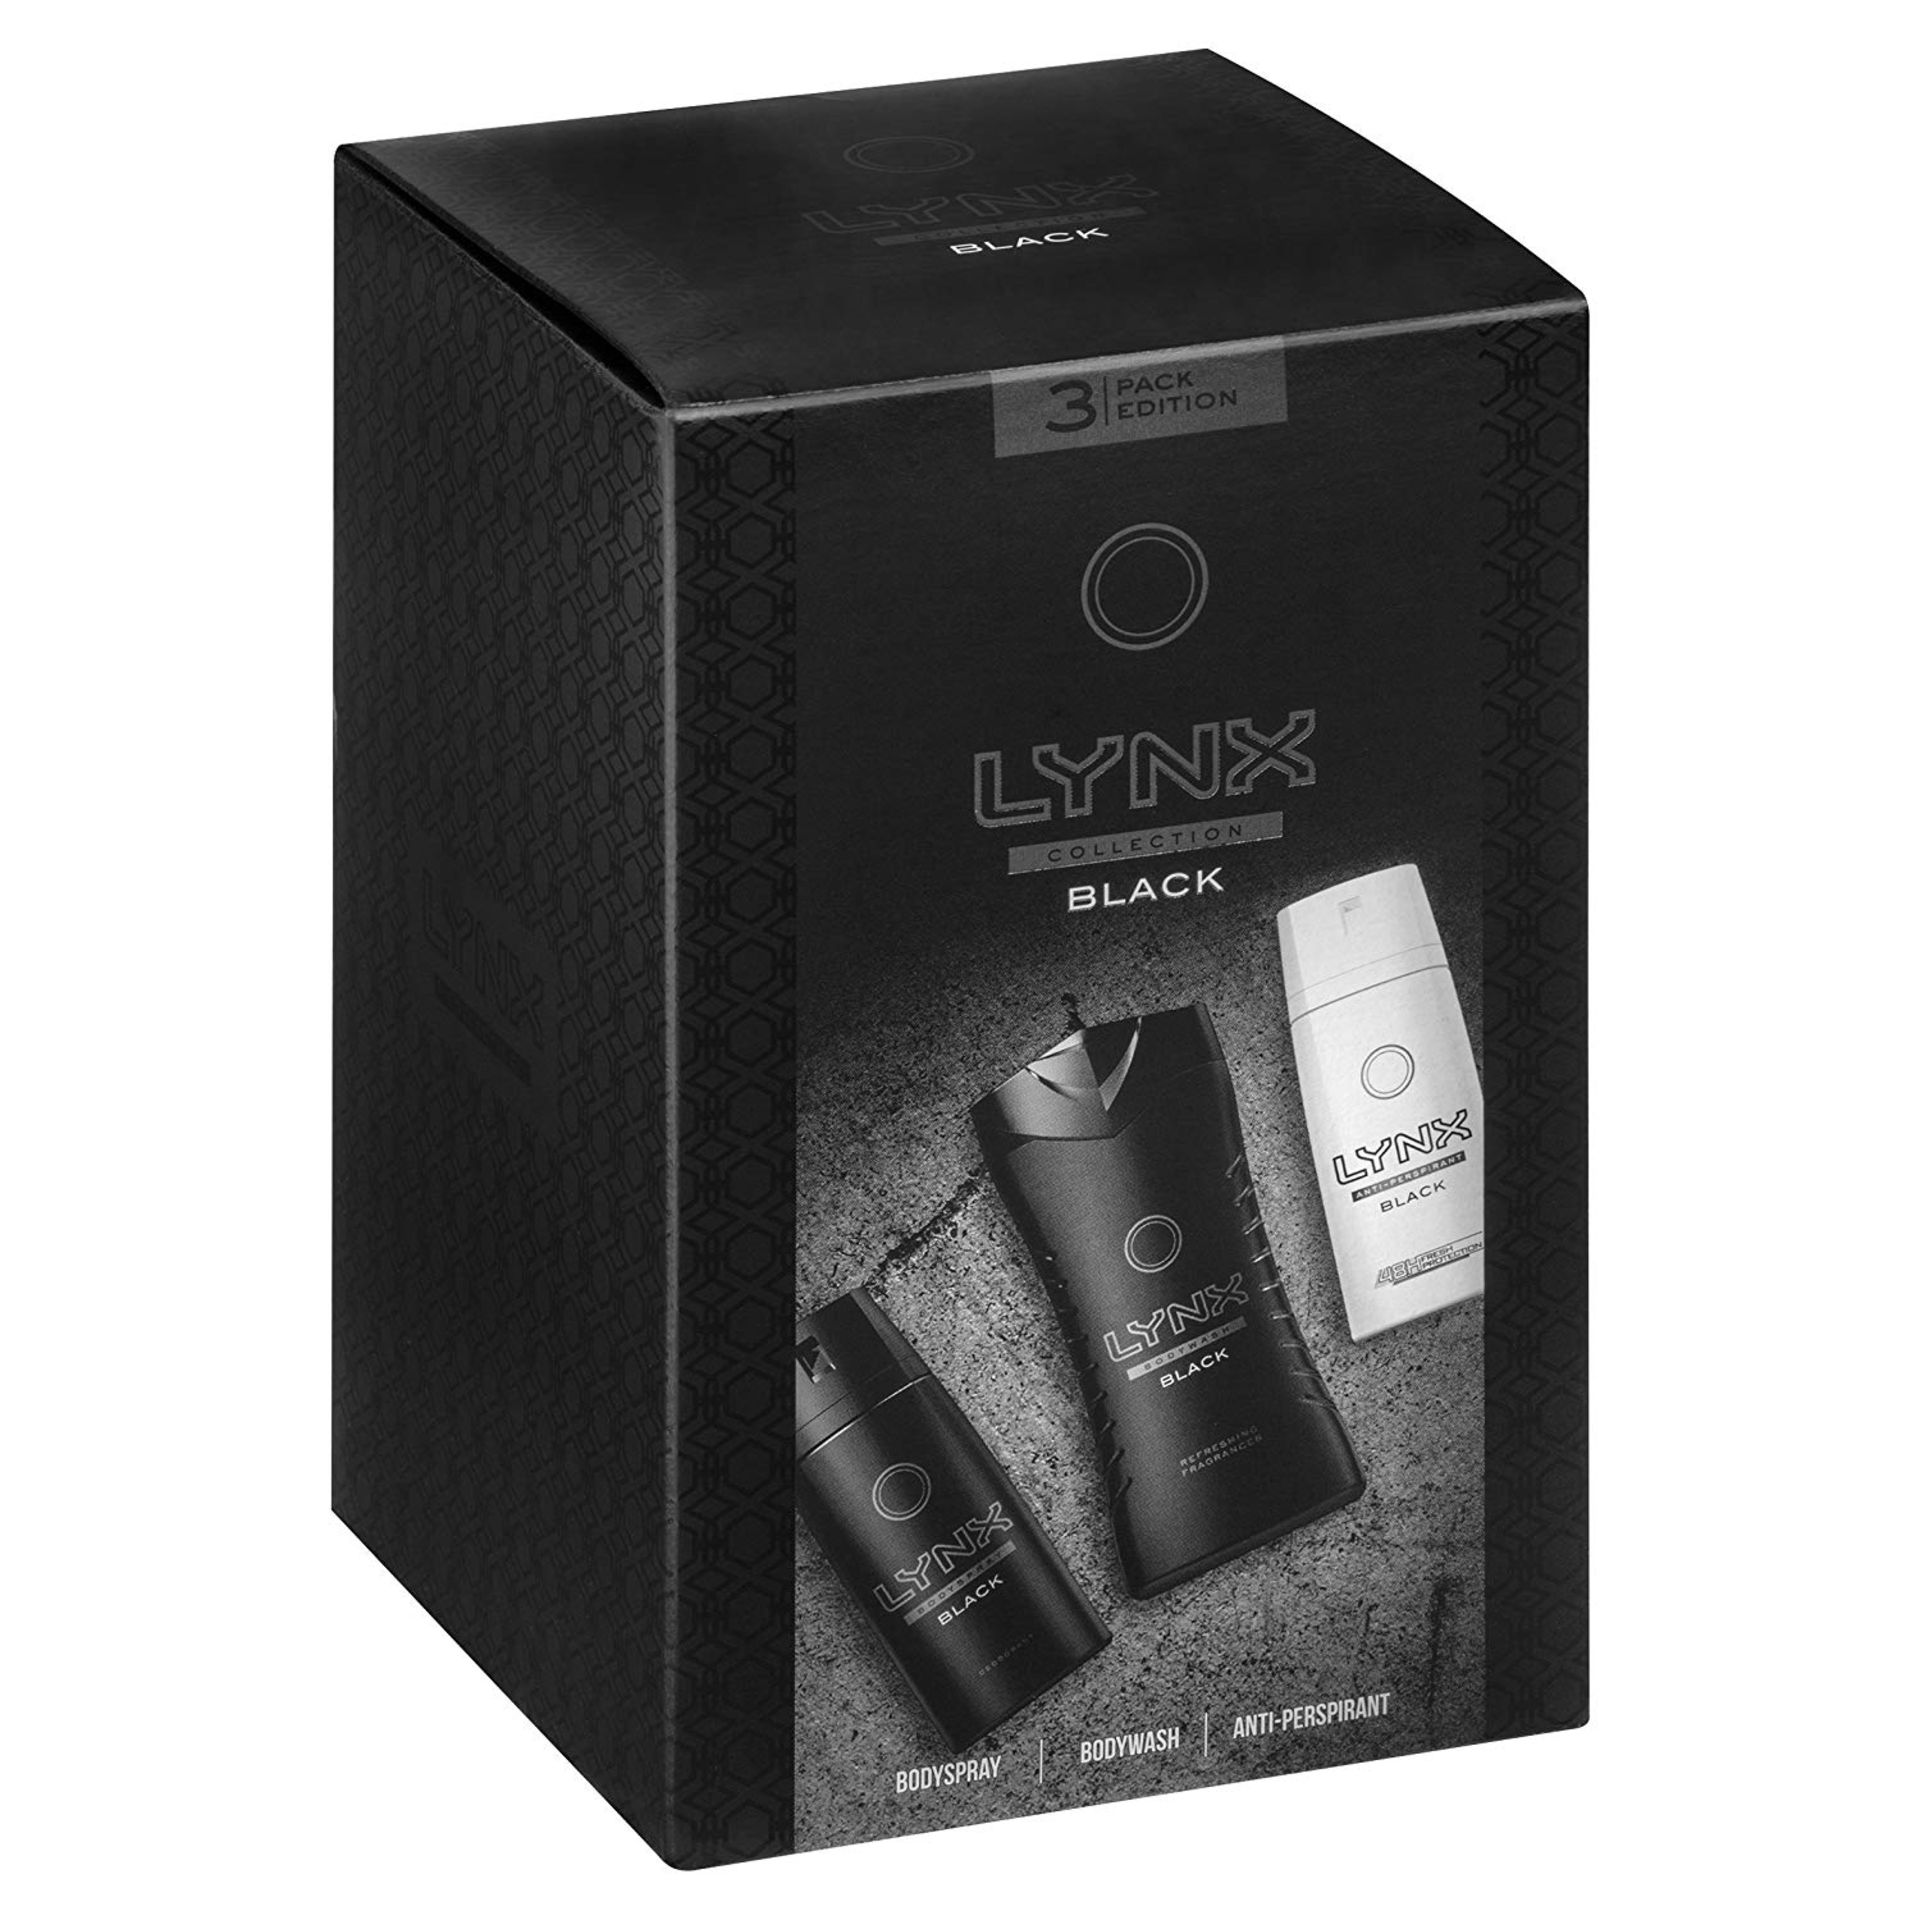 V Brand New Lynx Black Three Piece Gift Set Including 150ml Anti-Perspirant-250ml Body Wash-150ml - Image 2 of 2